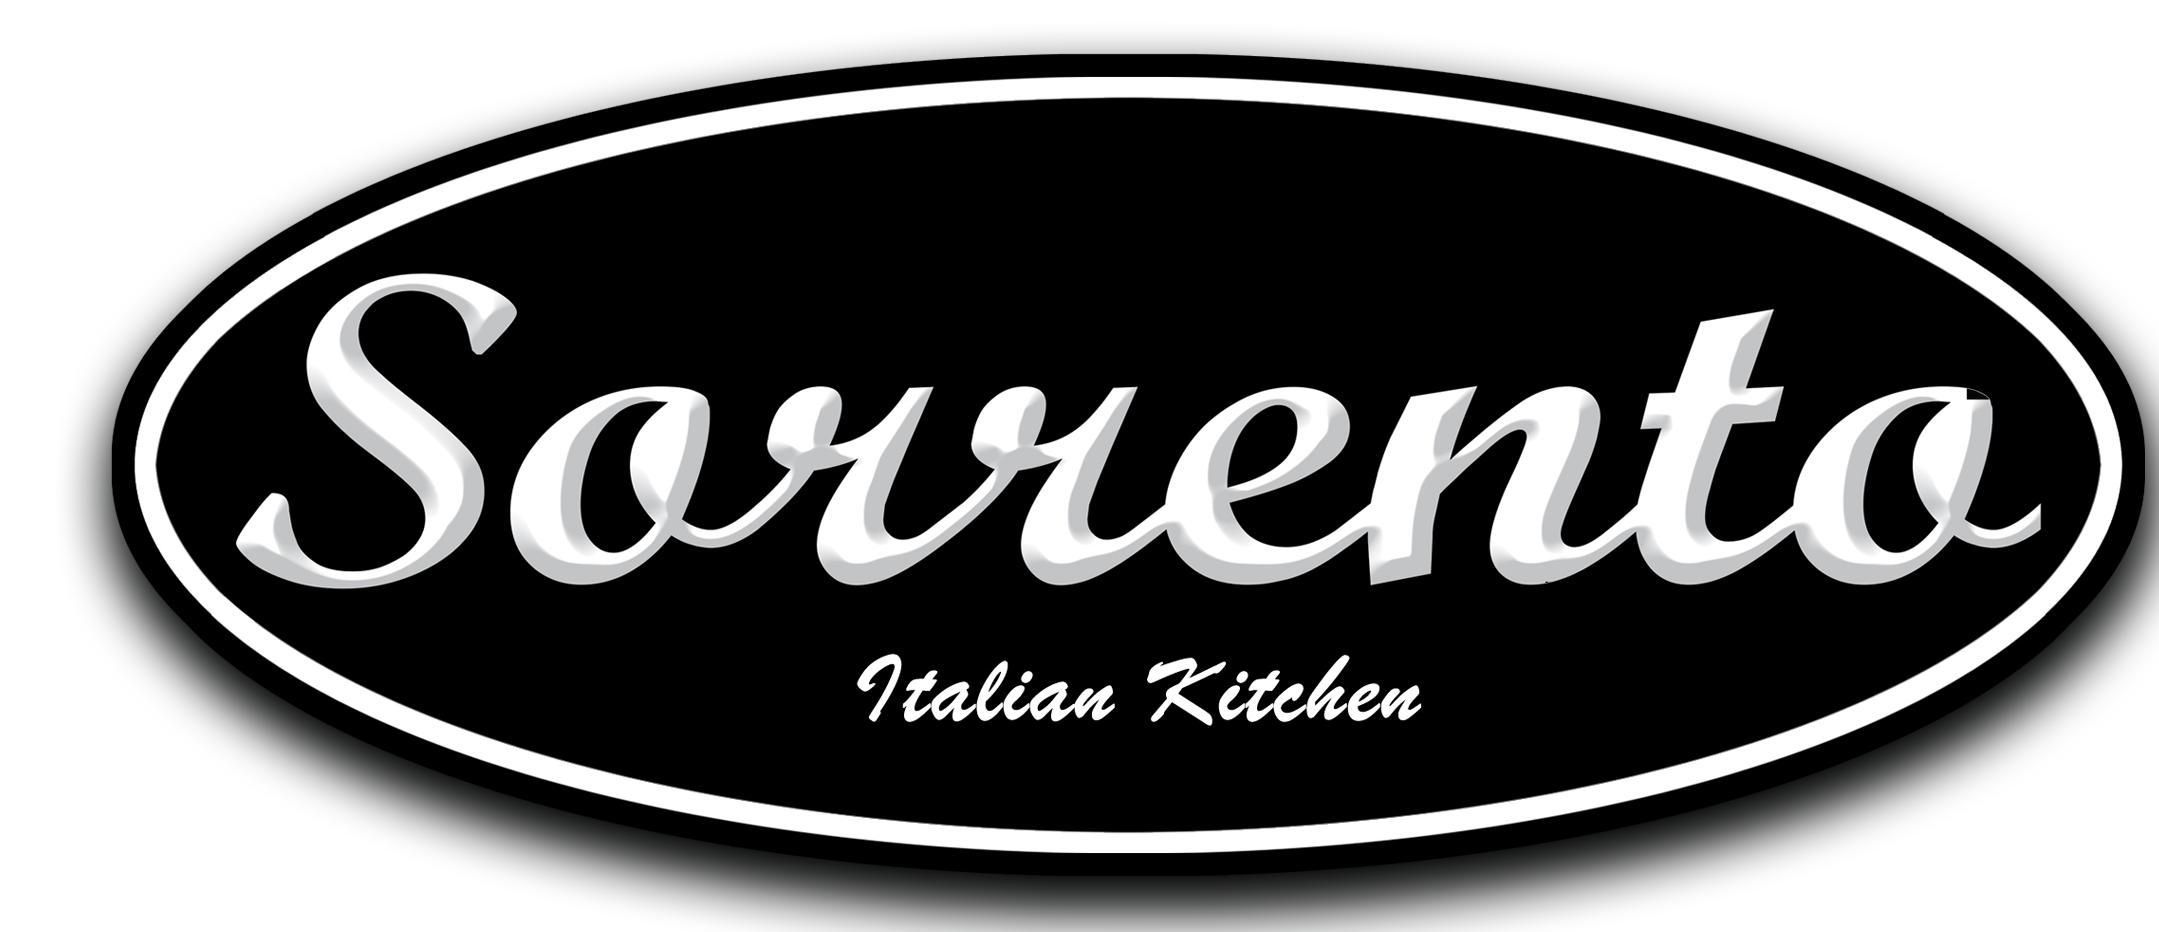 Sorrento Italian Kitchen Long Beach, Ca